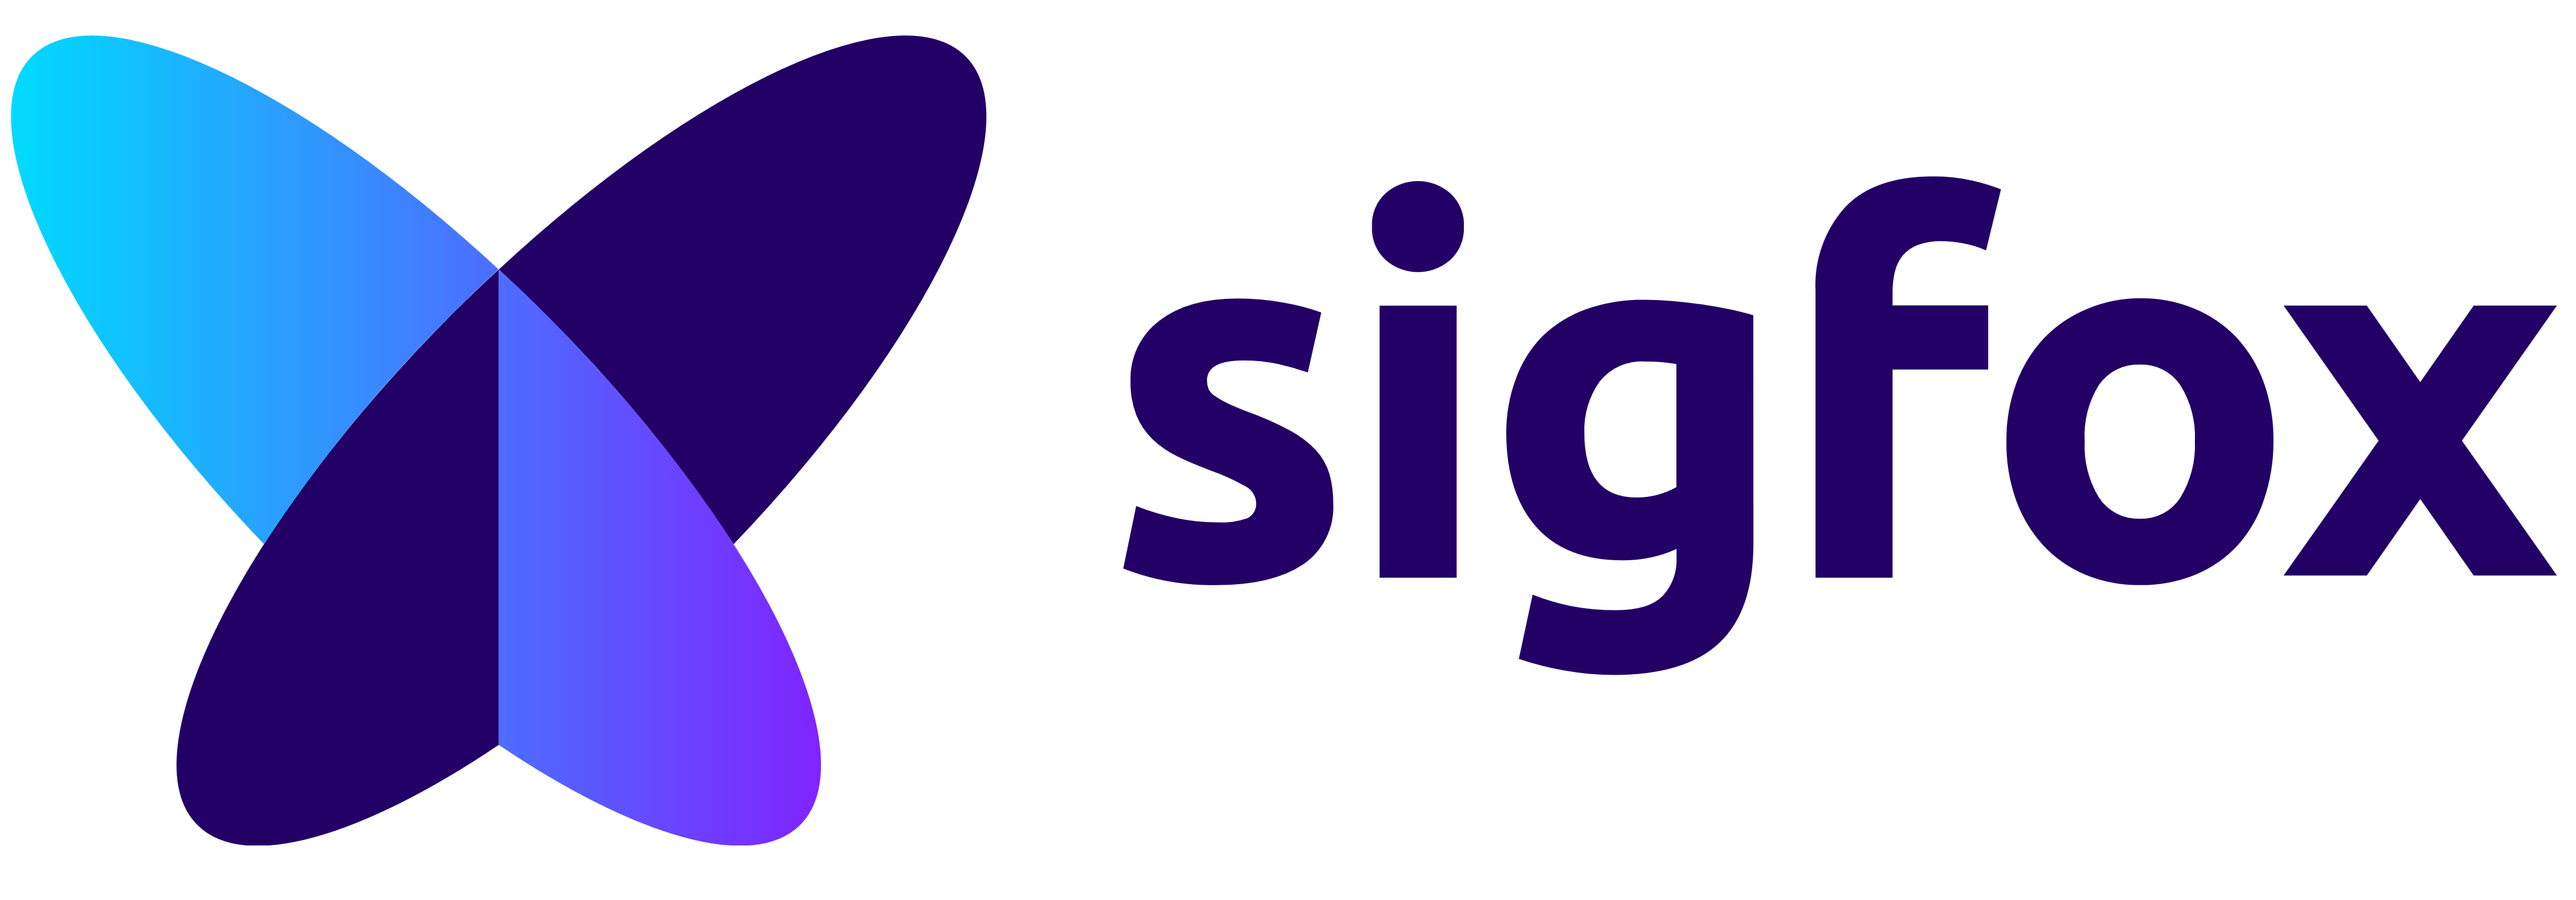 Sigfox logo, logotype